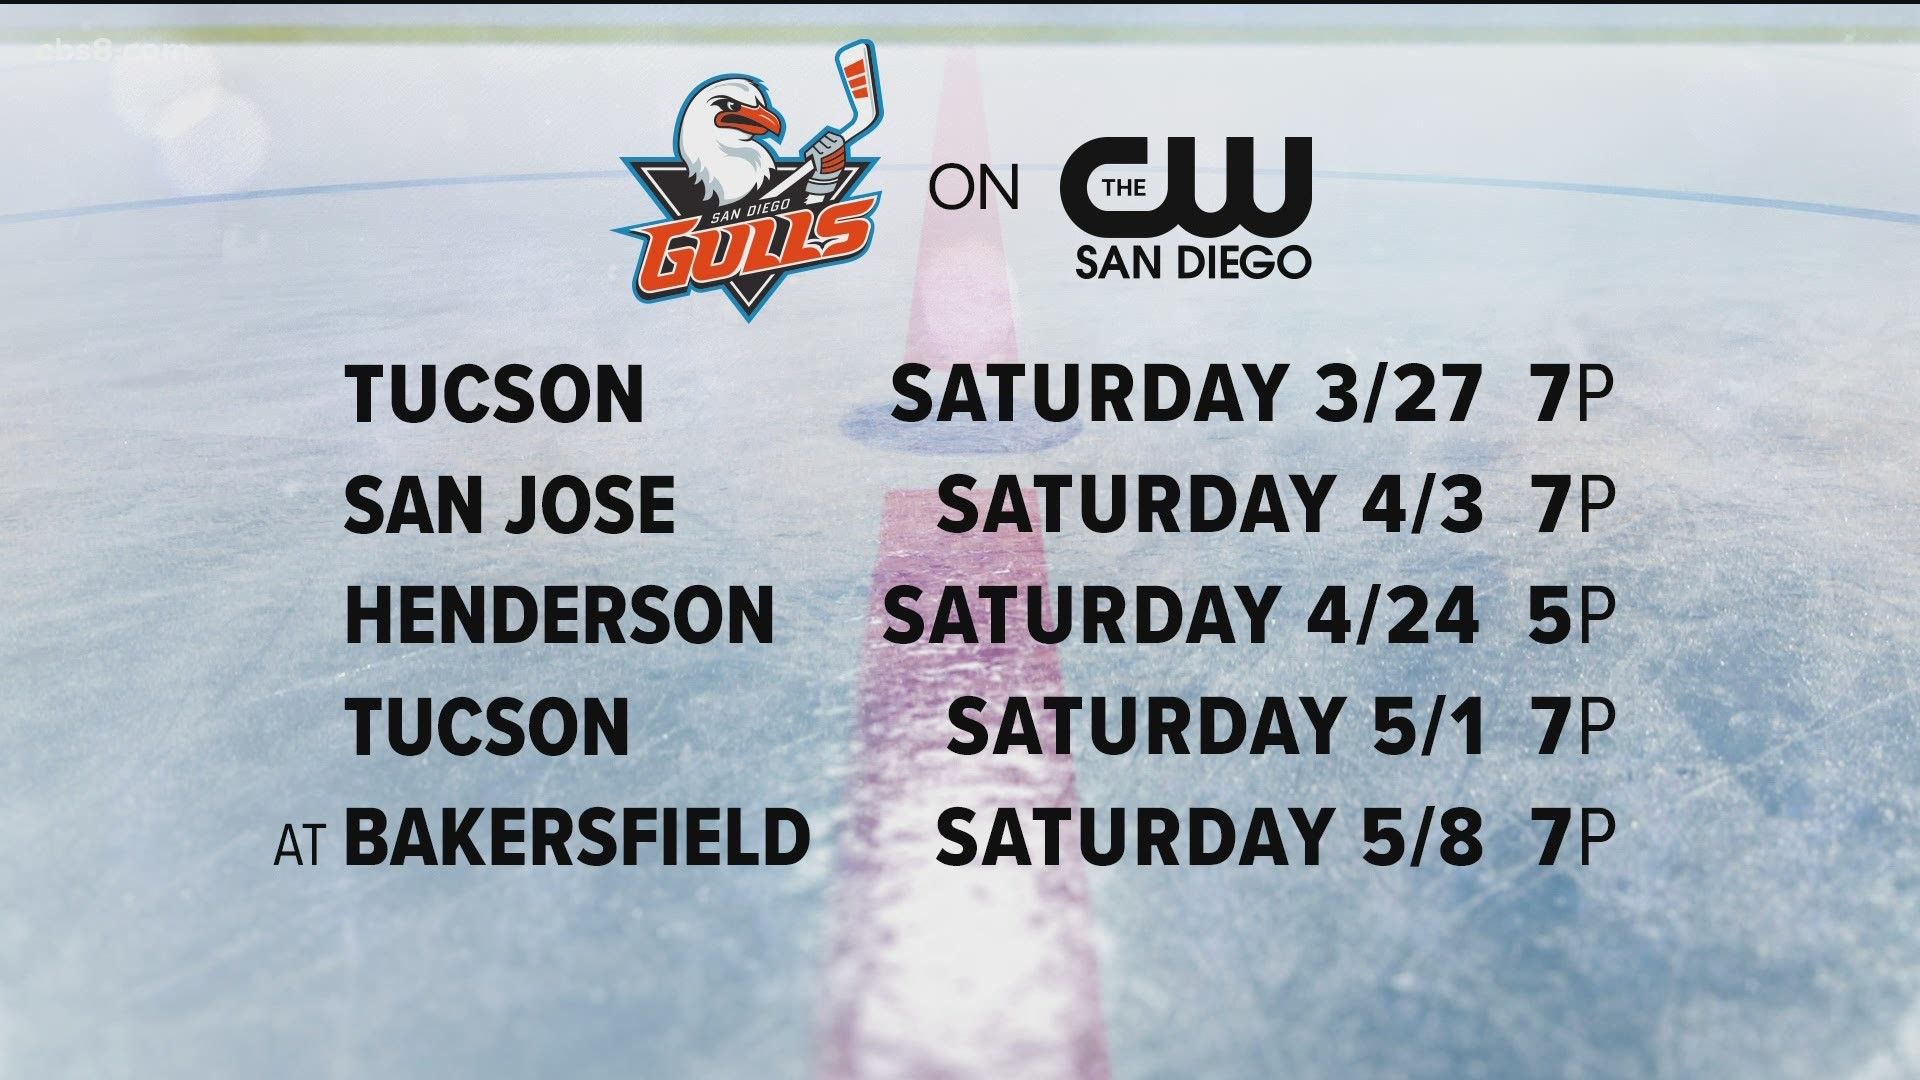 Ready to watch the San Diego Gulls?